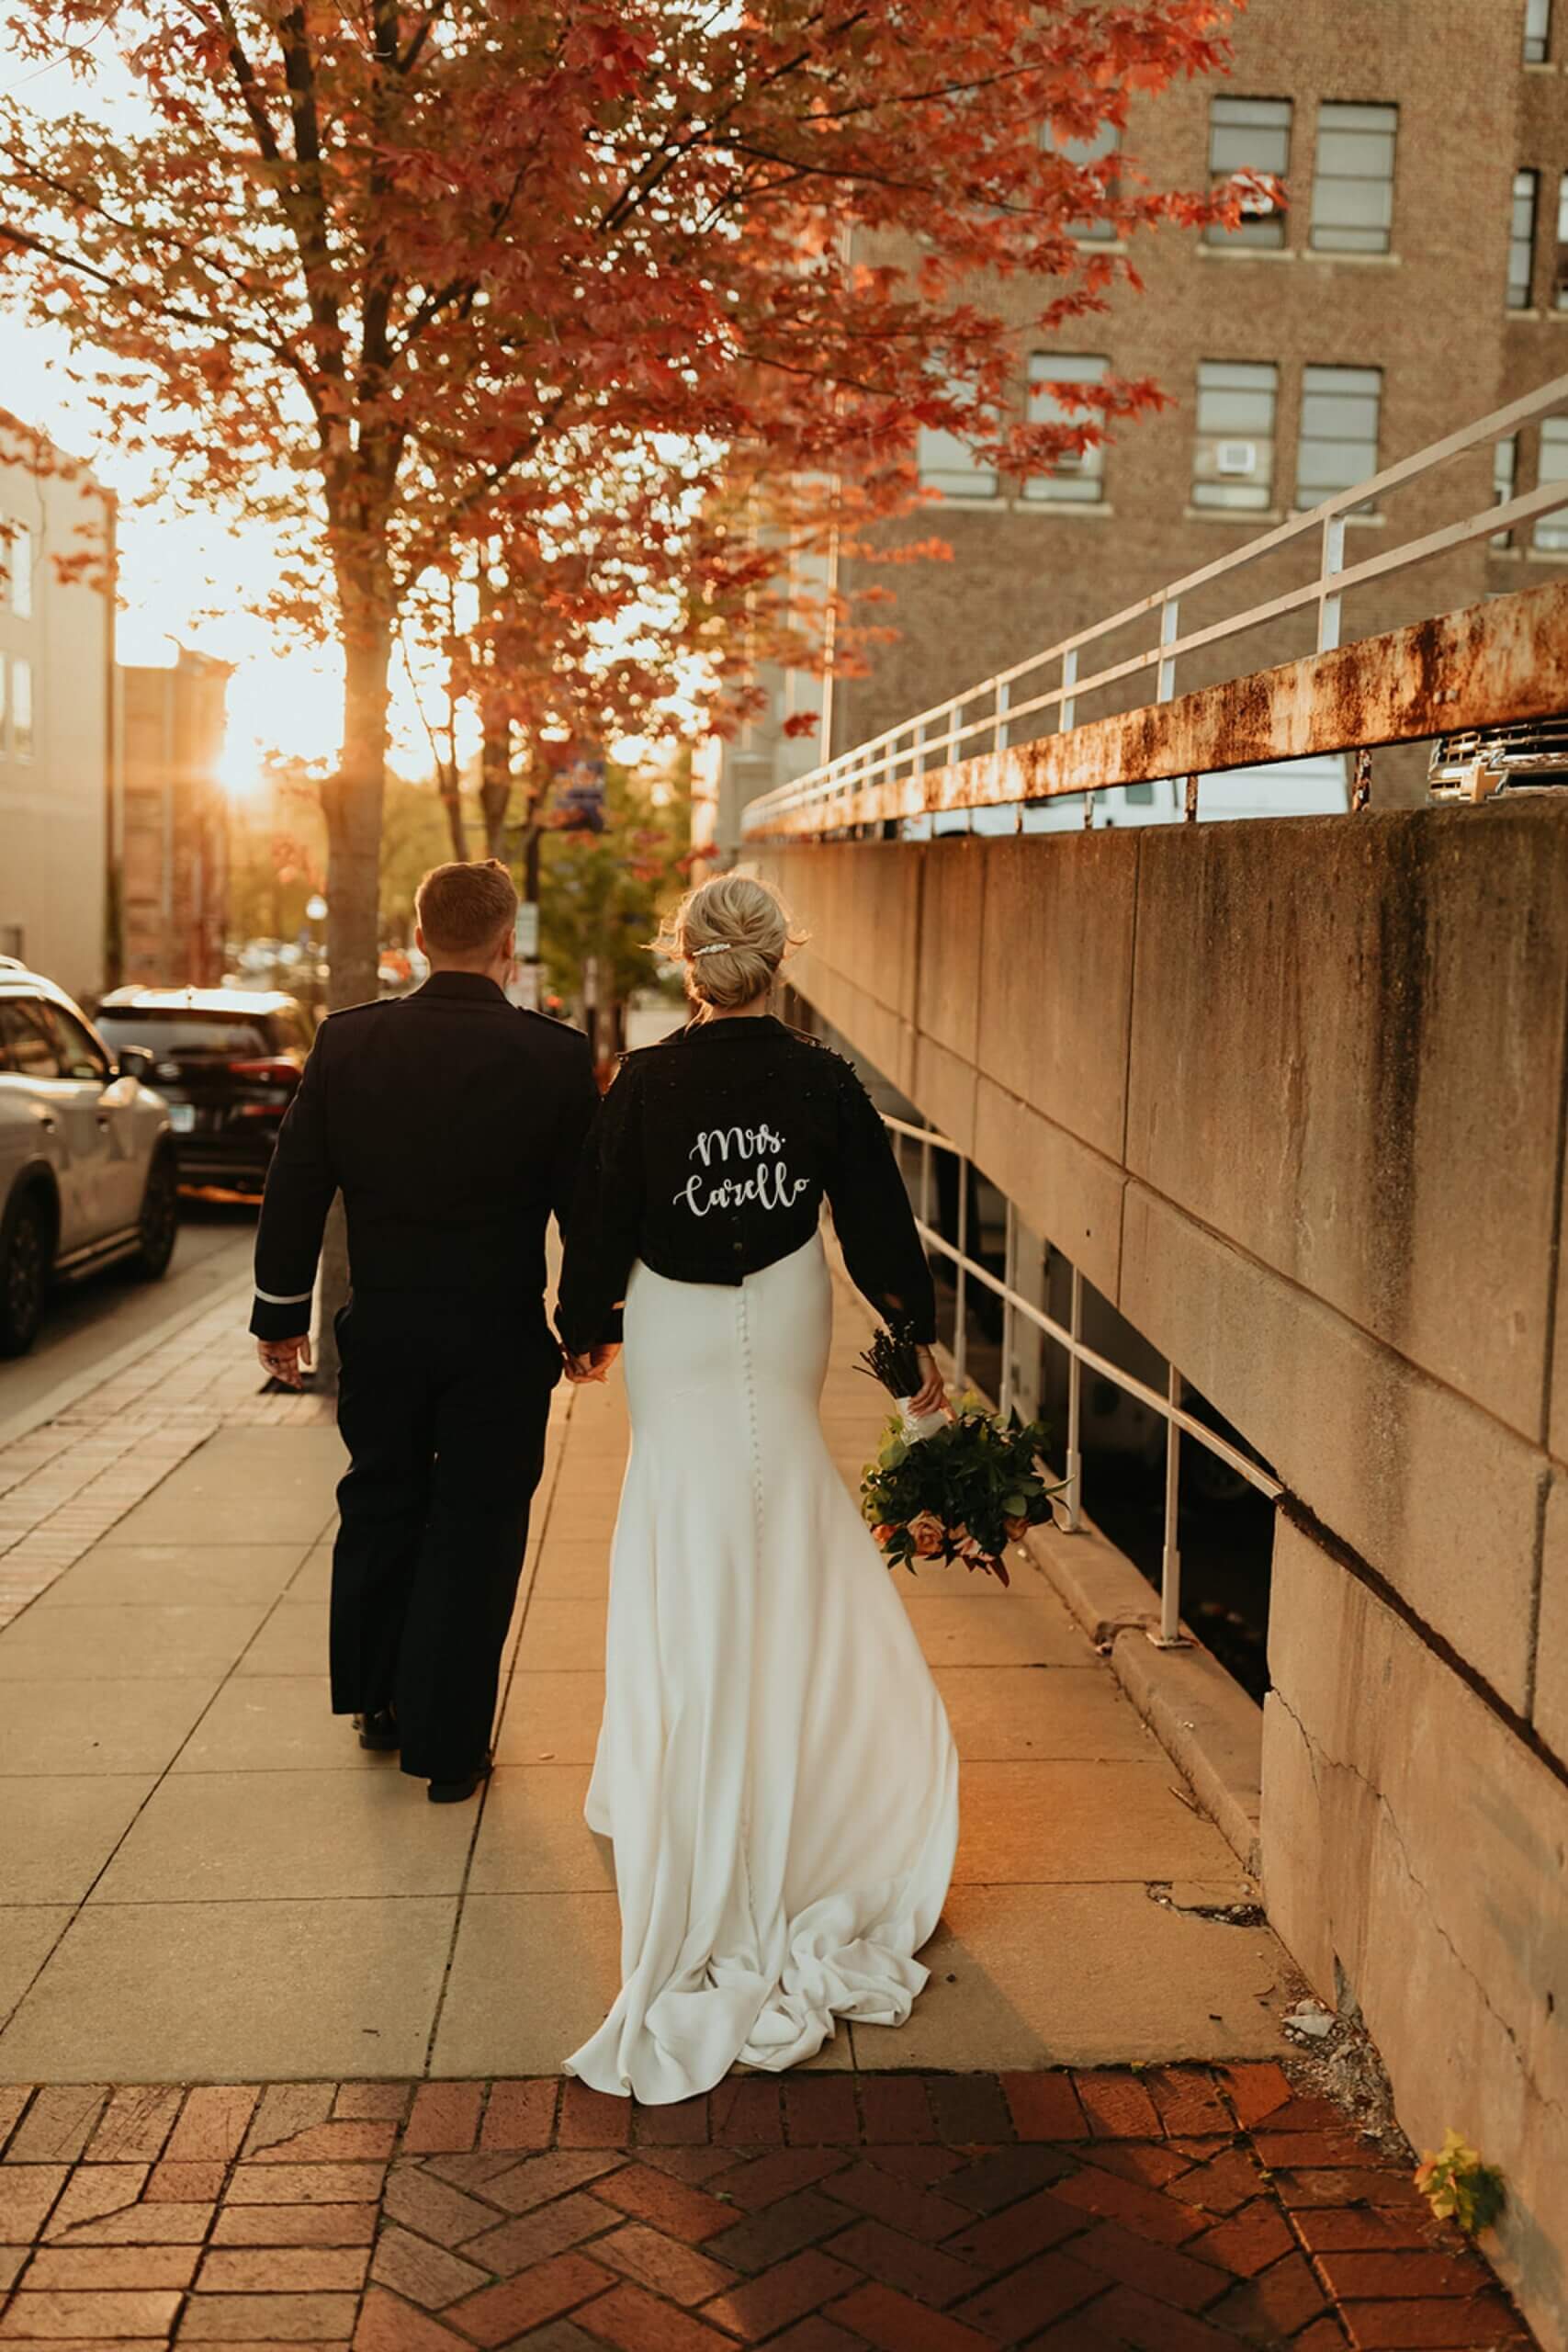 Bride wearing black jacket with her married name walking with groom